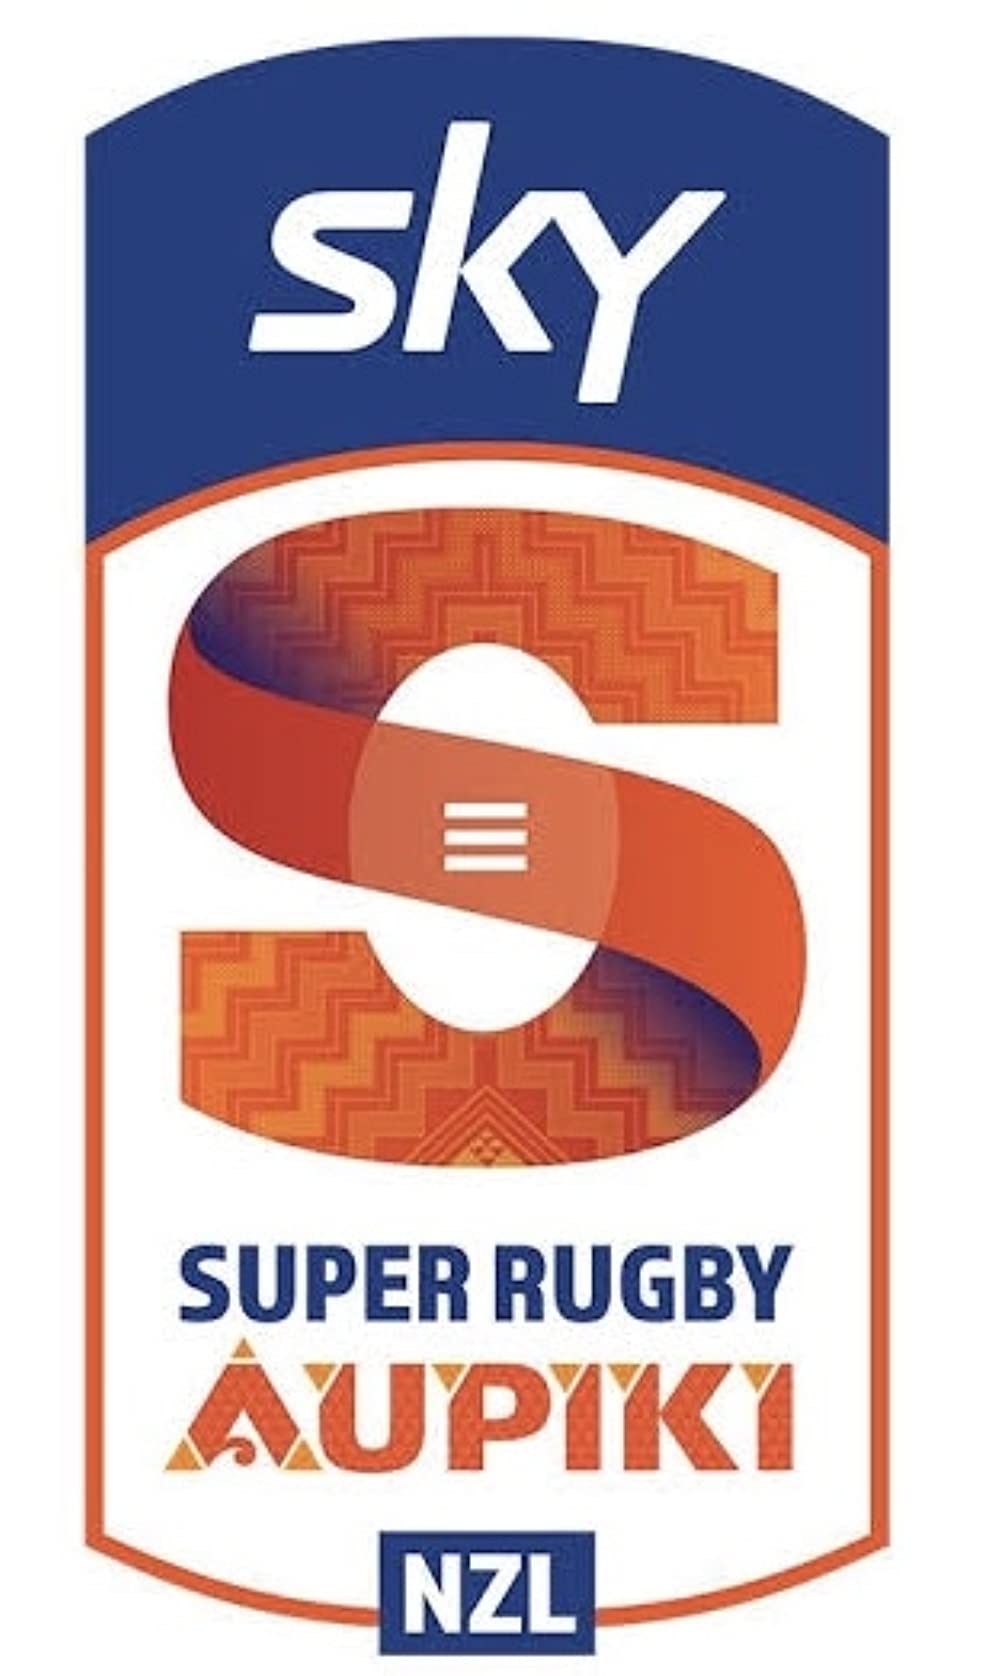 Super Rugby Aupiki